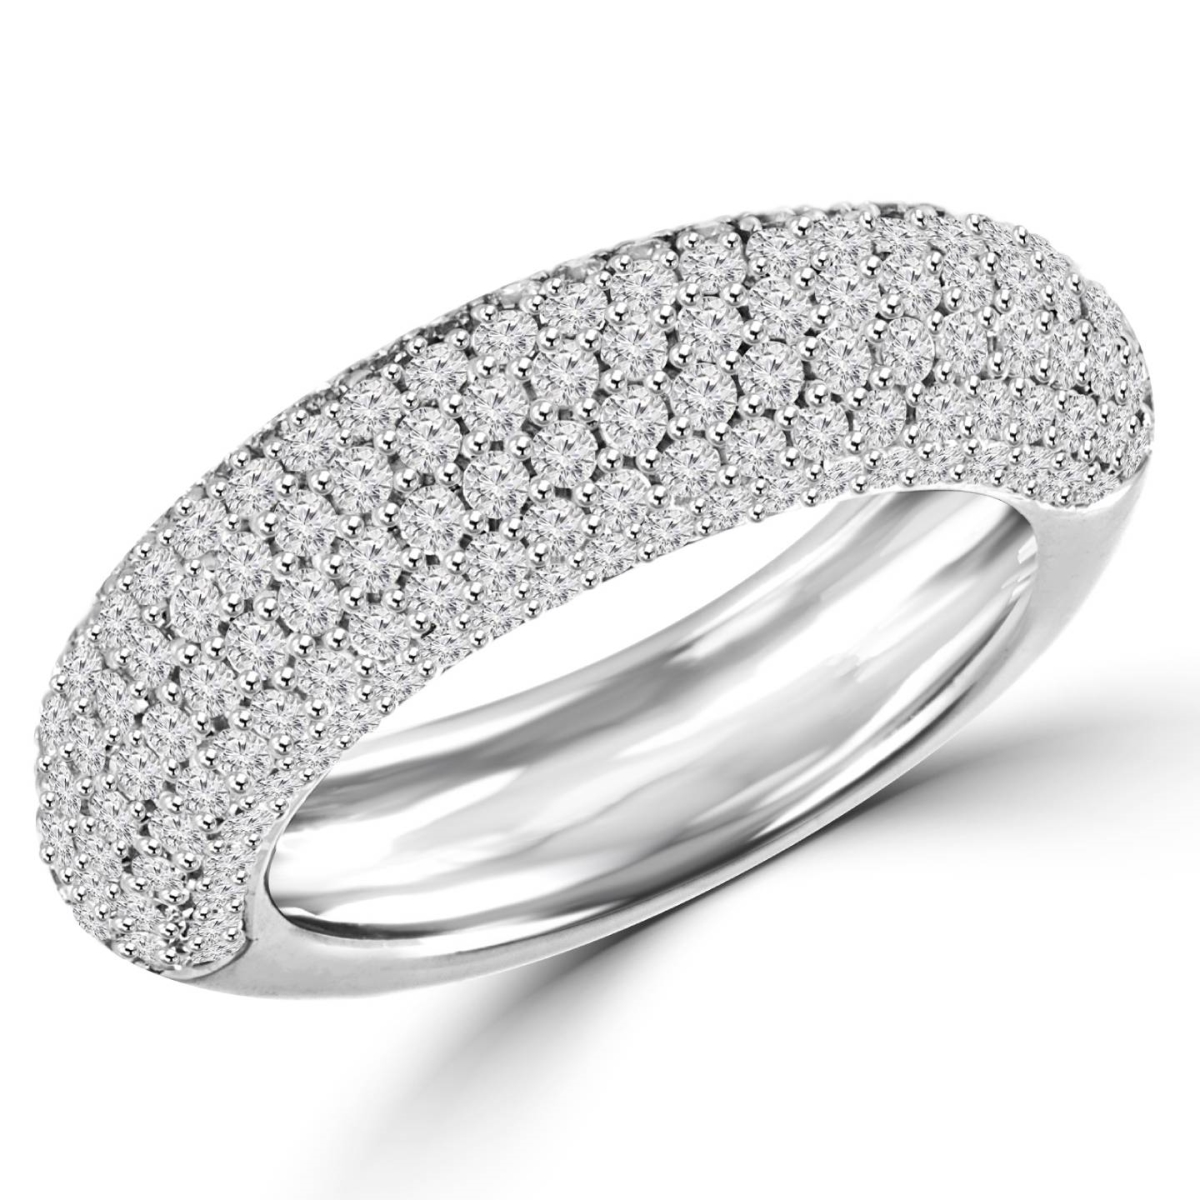 MDR140063-3.25 1.5 CTW Pave Set Round Diamond Anniversary Wedding Band Ring in 14K White Gold - Size 3.25 -  Majesty Diamonds